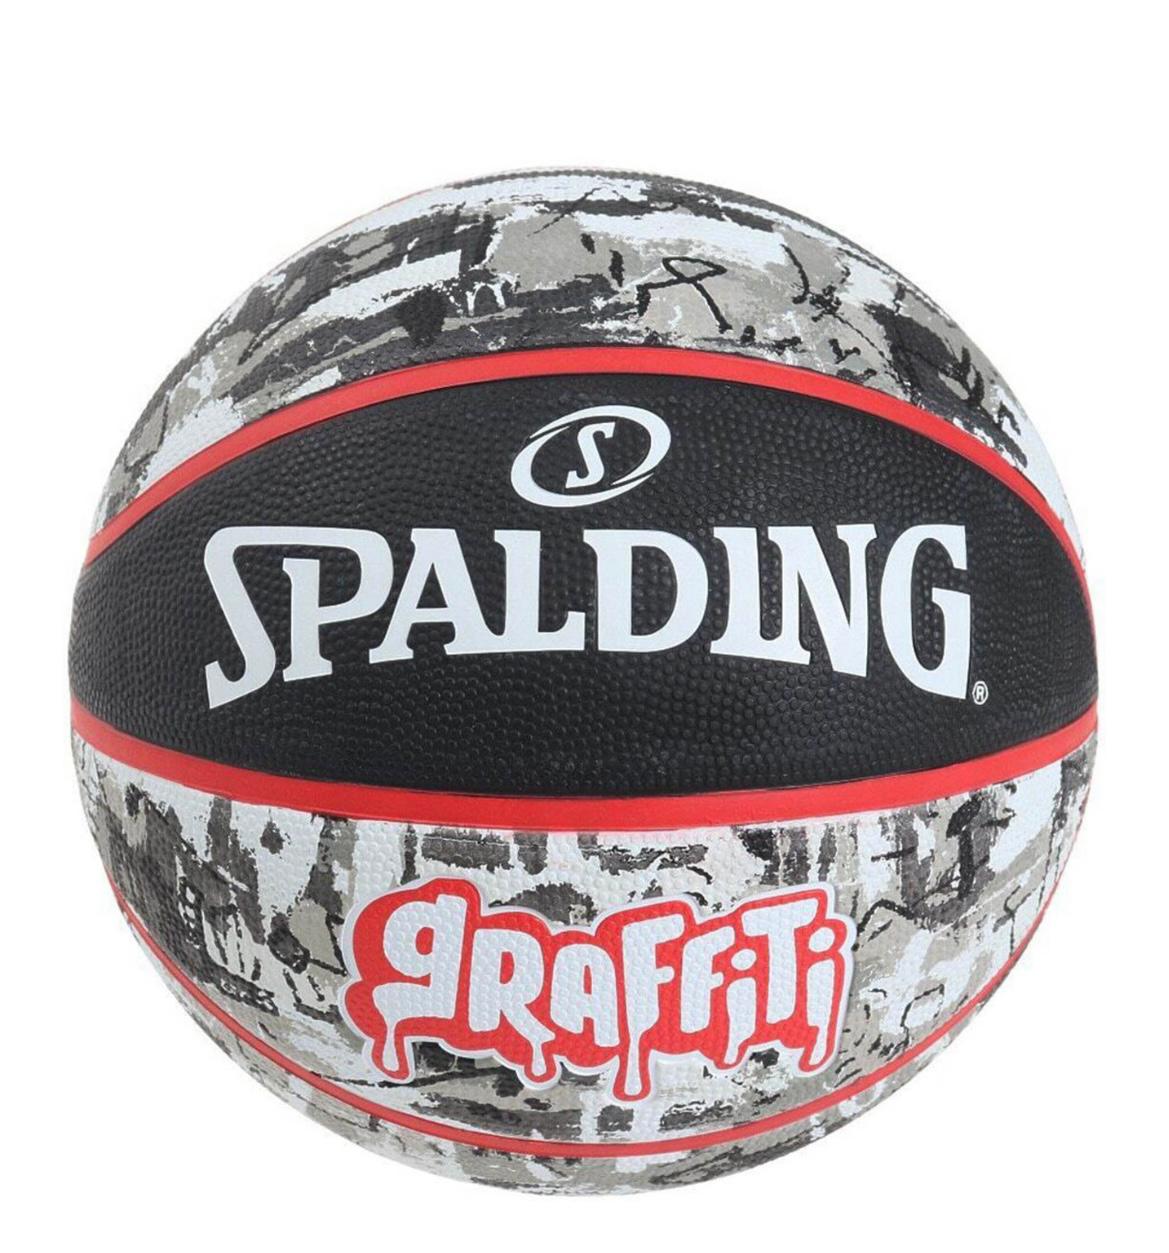 Spalding Street Graffiti Basketball